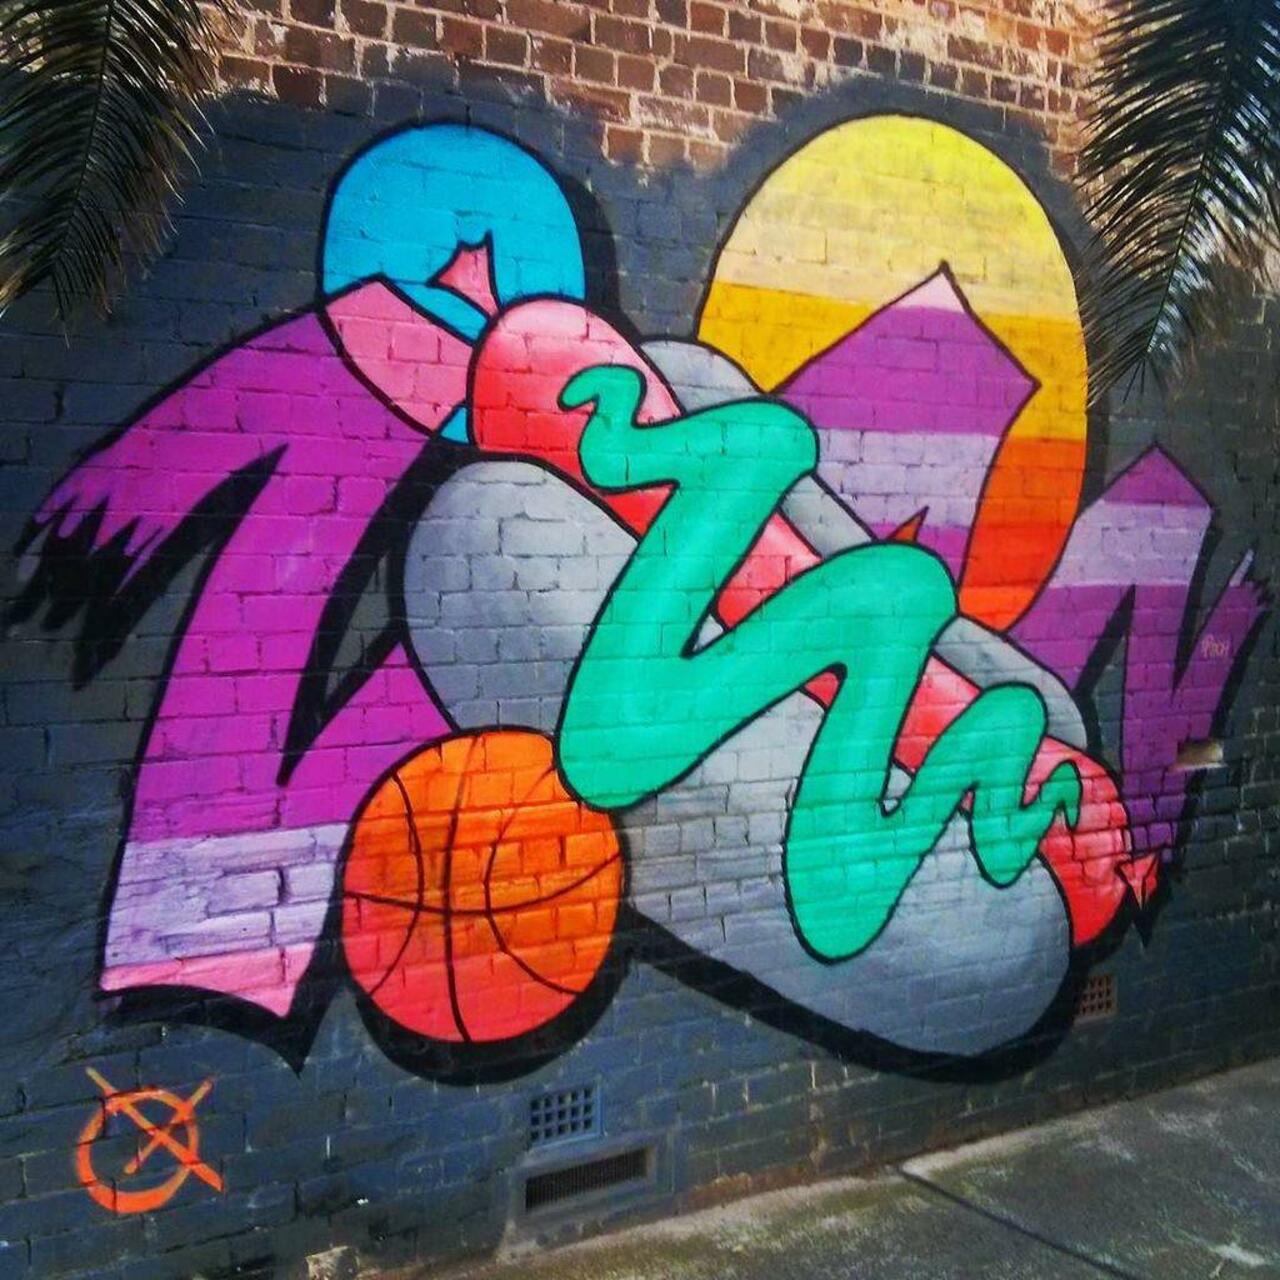 Hot dawg! #newtown #sydney #sydneygraffiti #ifttt #hotdog #rsa_graffiti #arteurbano #streetart #graffiti #graffiso http://t.co/4tgLpcUWPx